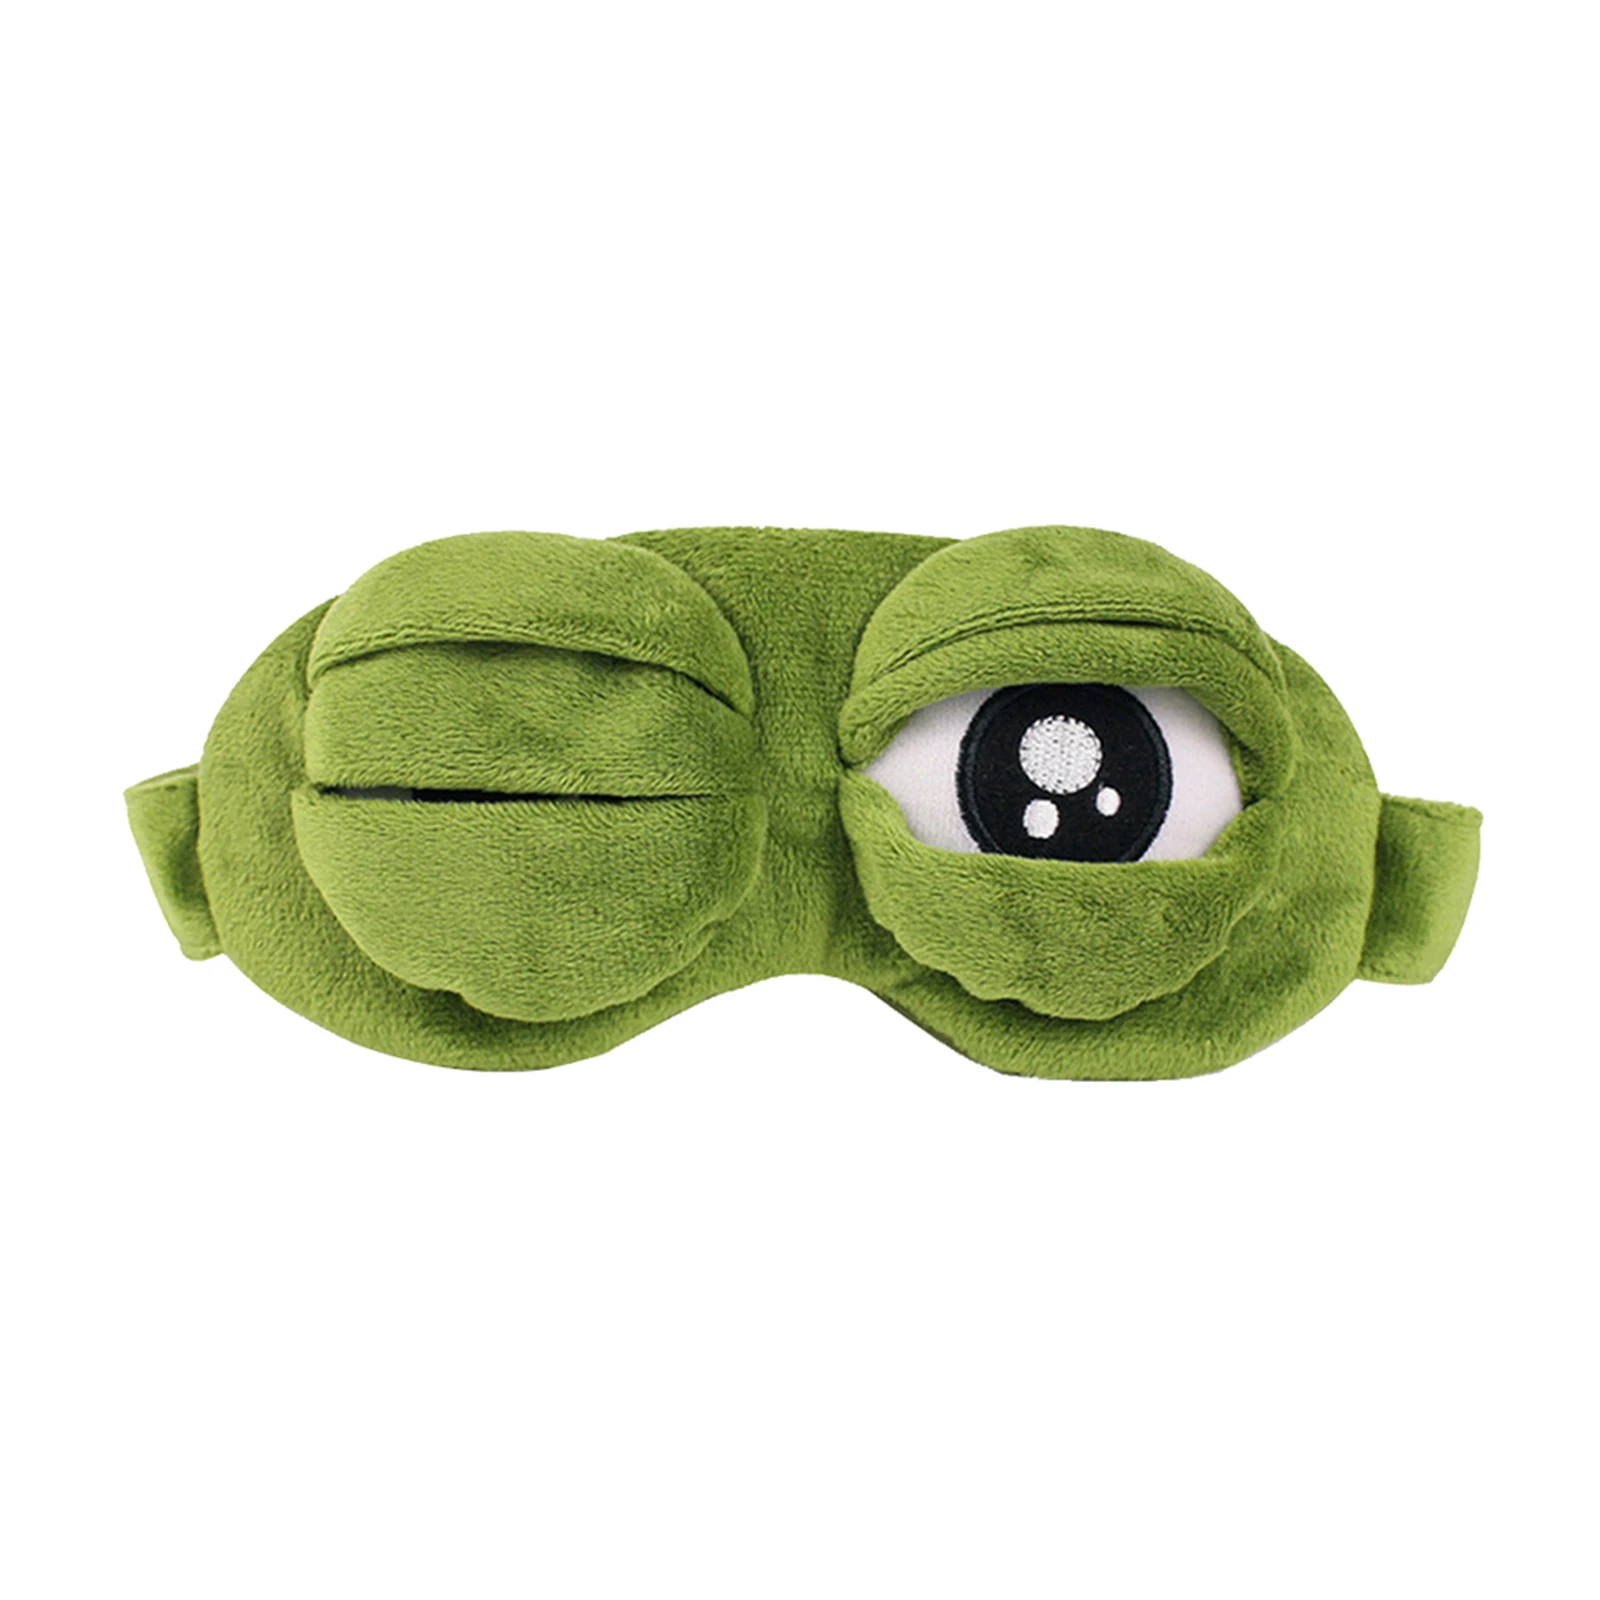 Soft Cotton Sleeping Mask Frog Blindfold Travel Sleep Eye Cover Girl Gift